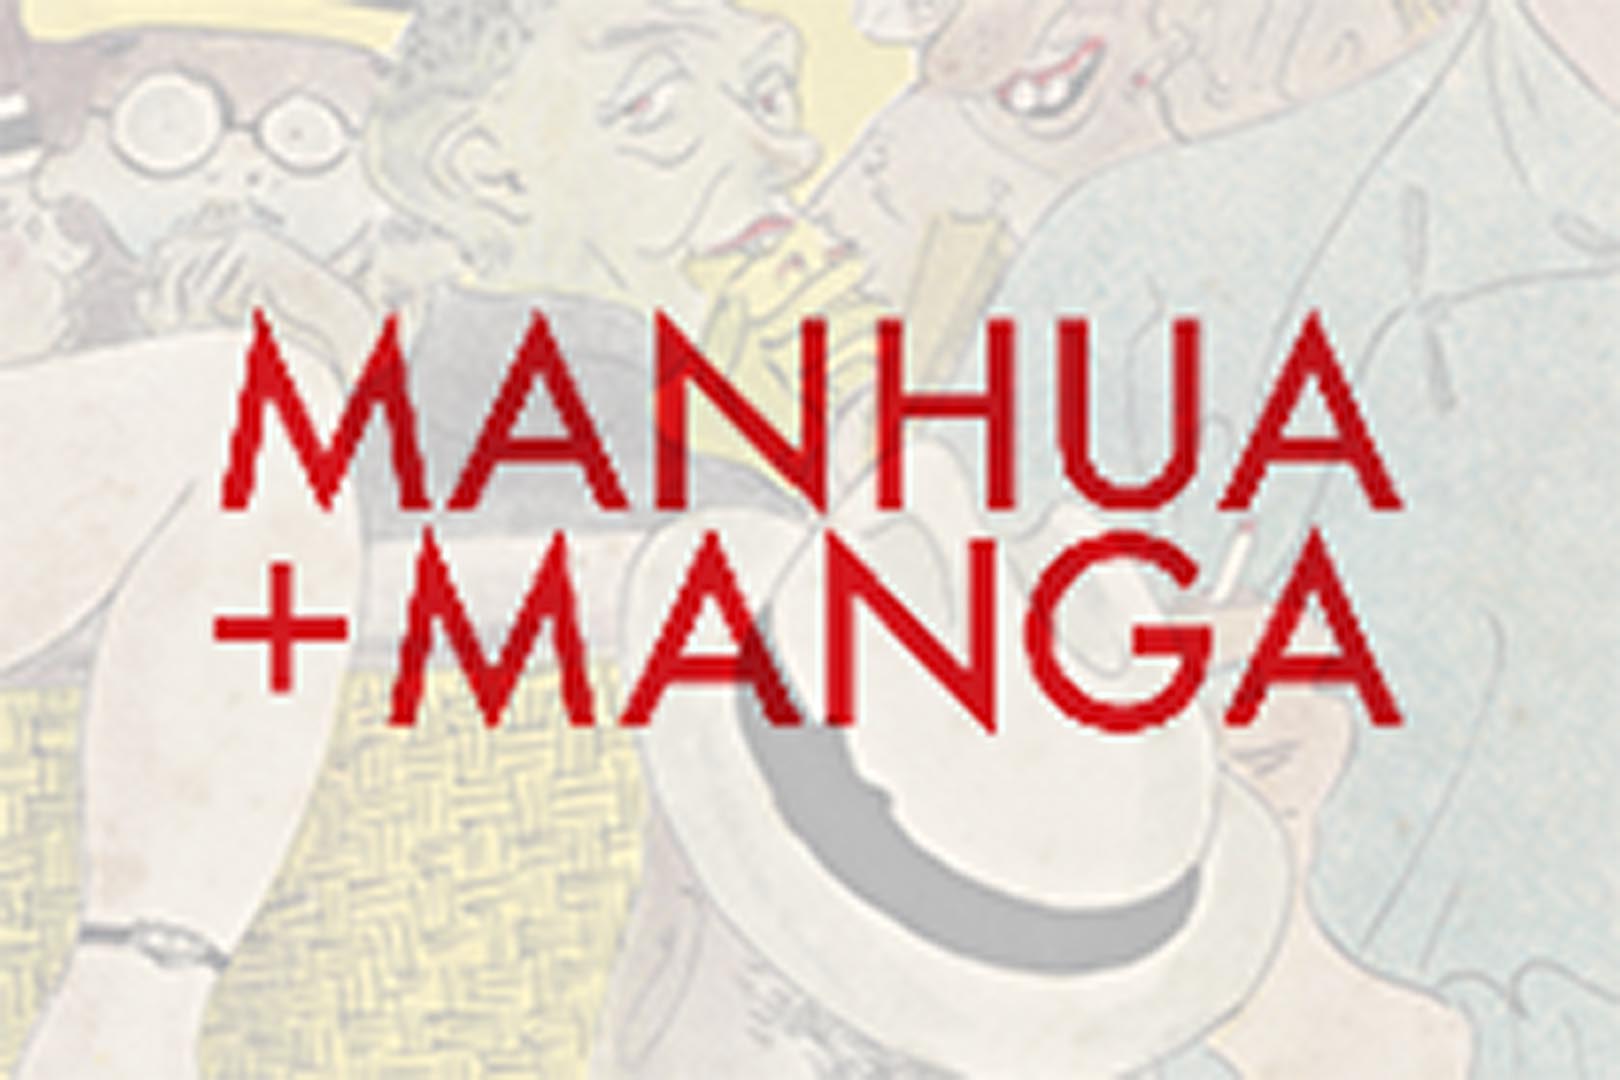 Exhibition: "Manhua + Manga"